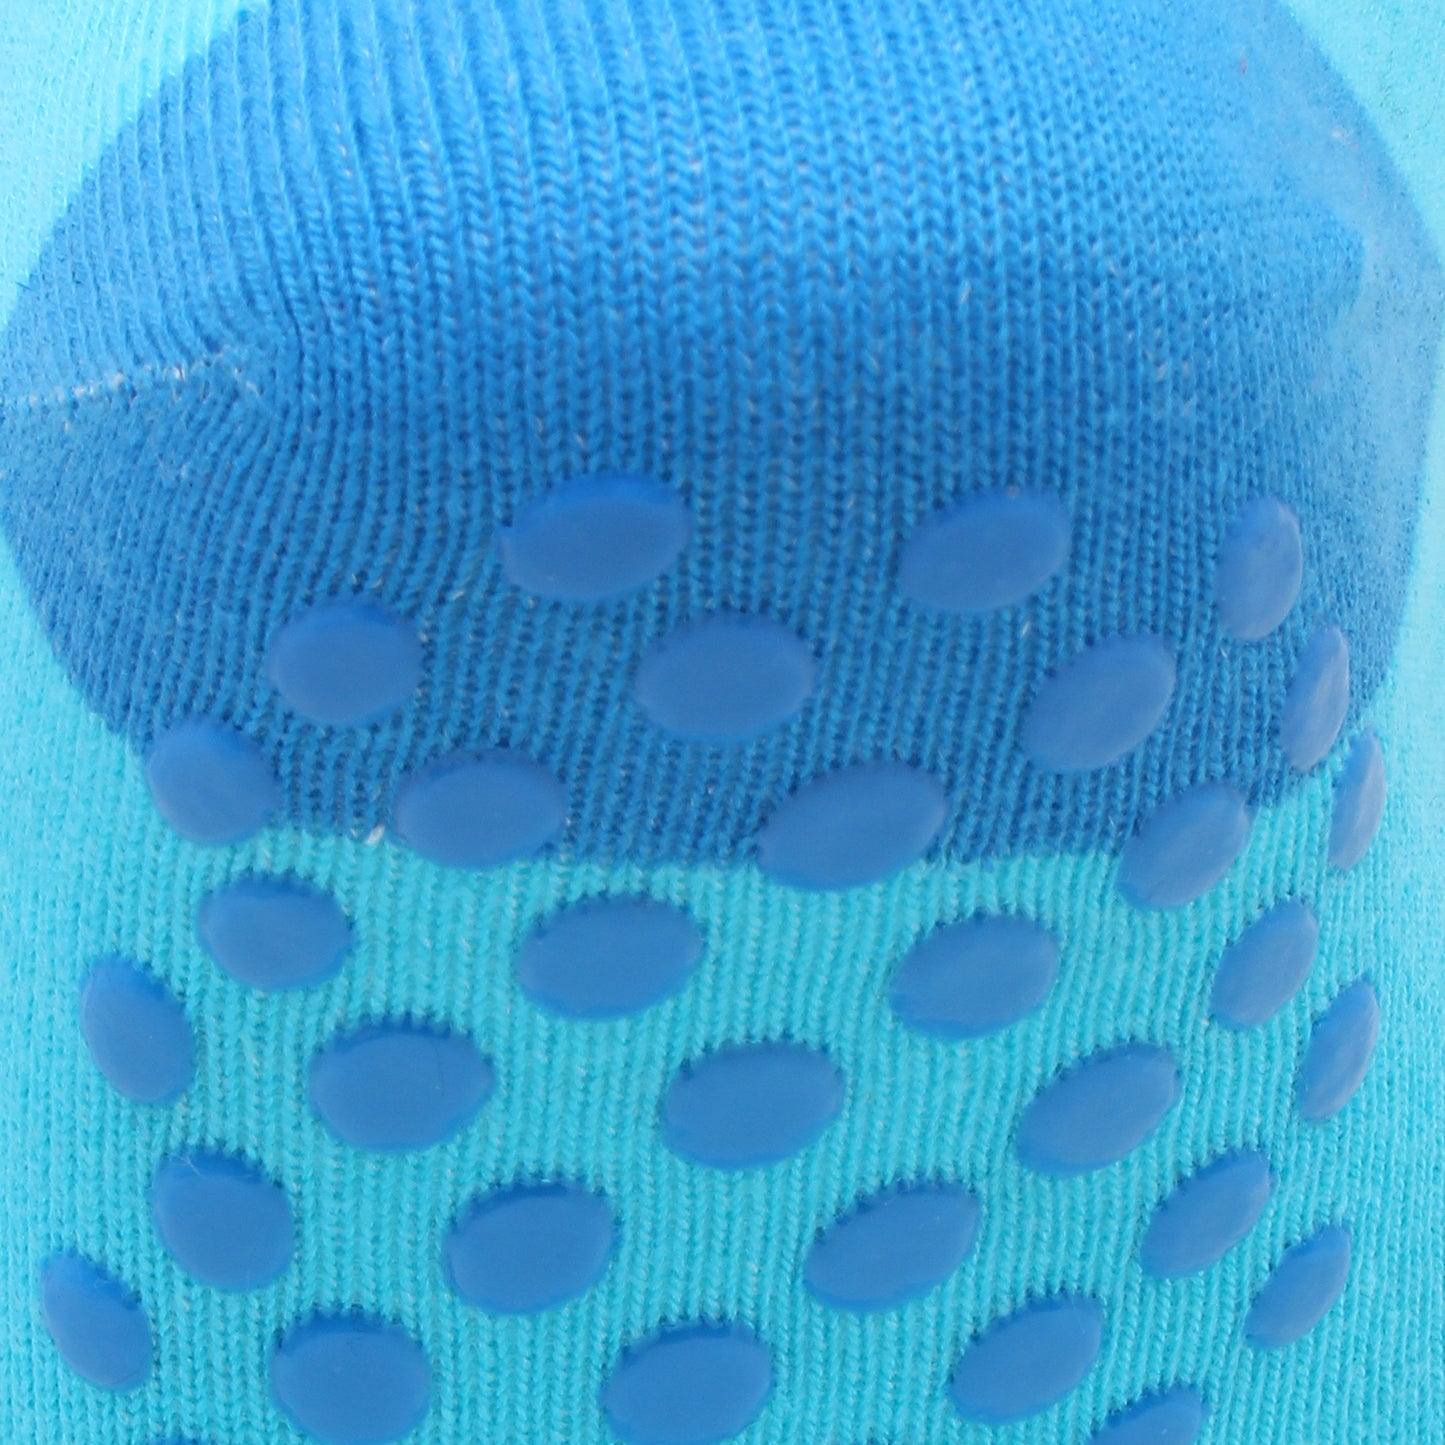 Grip	Motion Socks - Blue